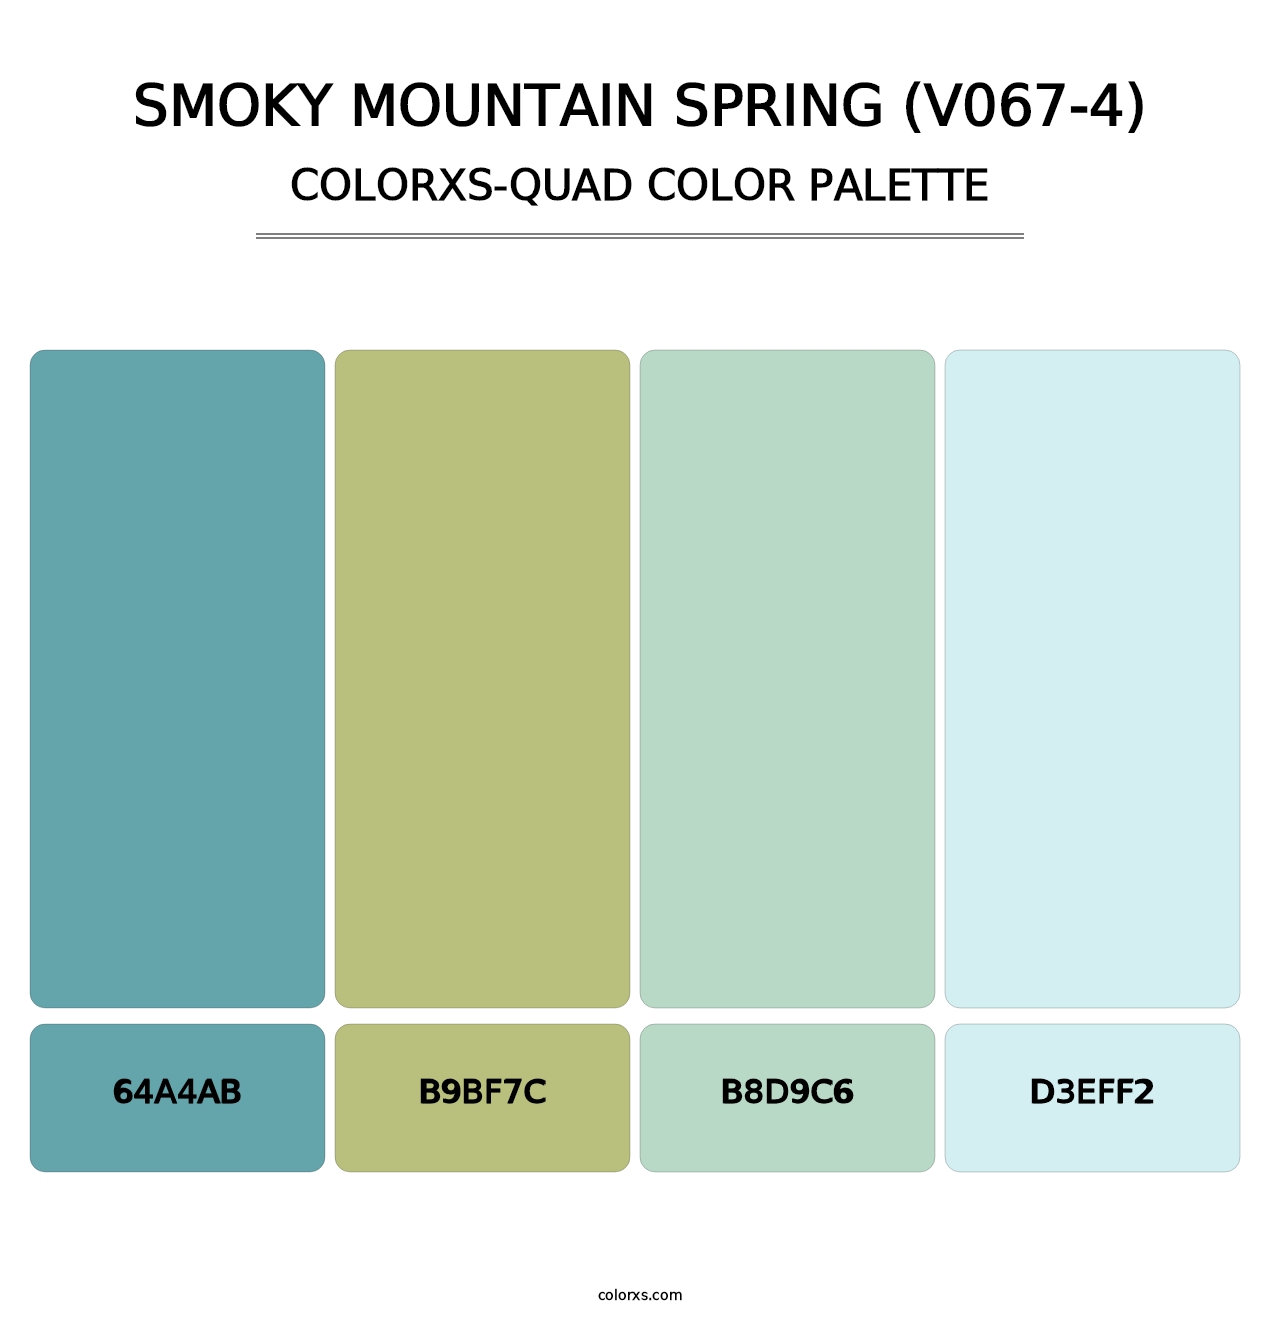 Smoky Mountain Spring (V067-4) - Colorxs Quad Palette